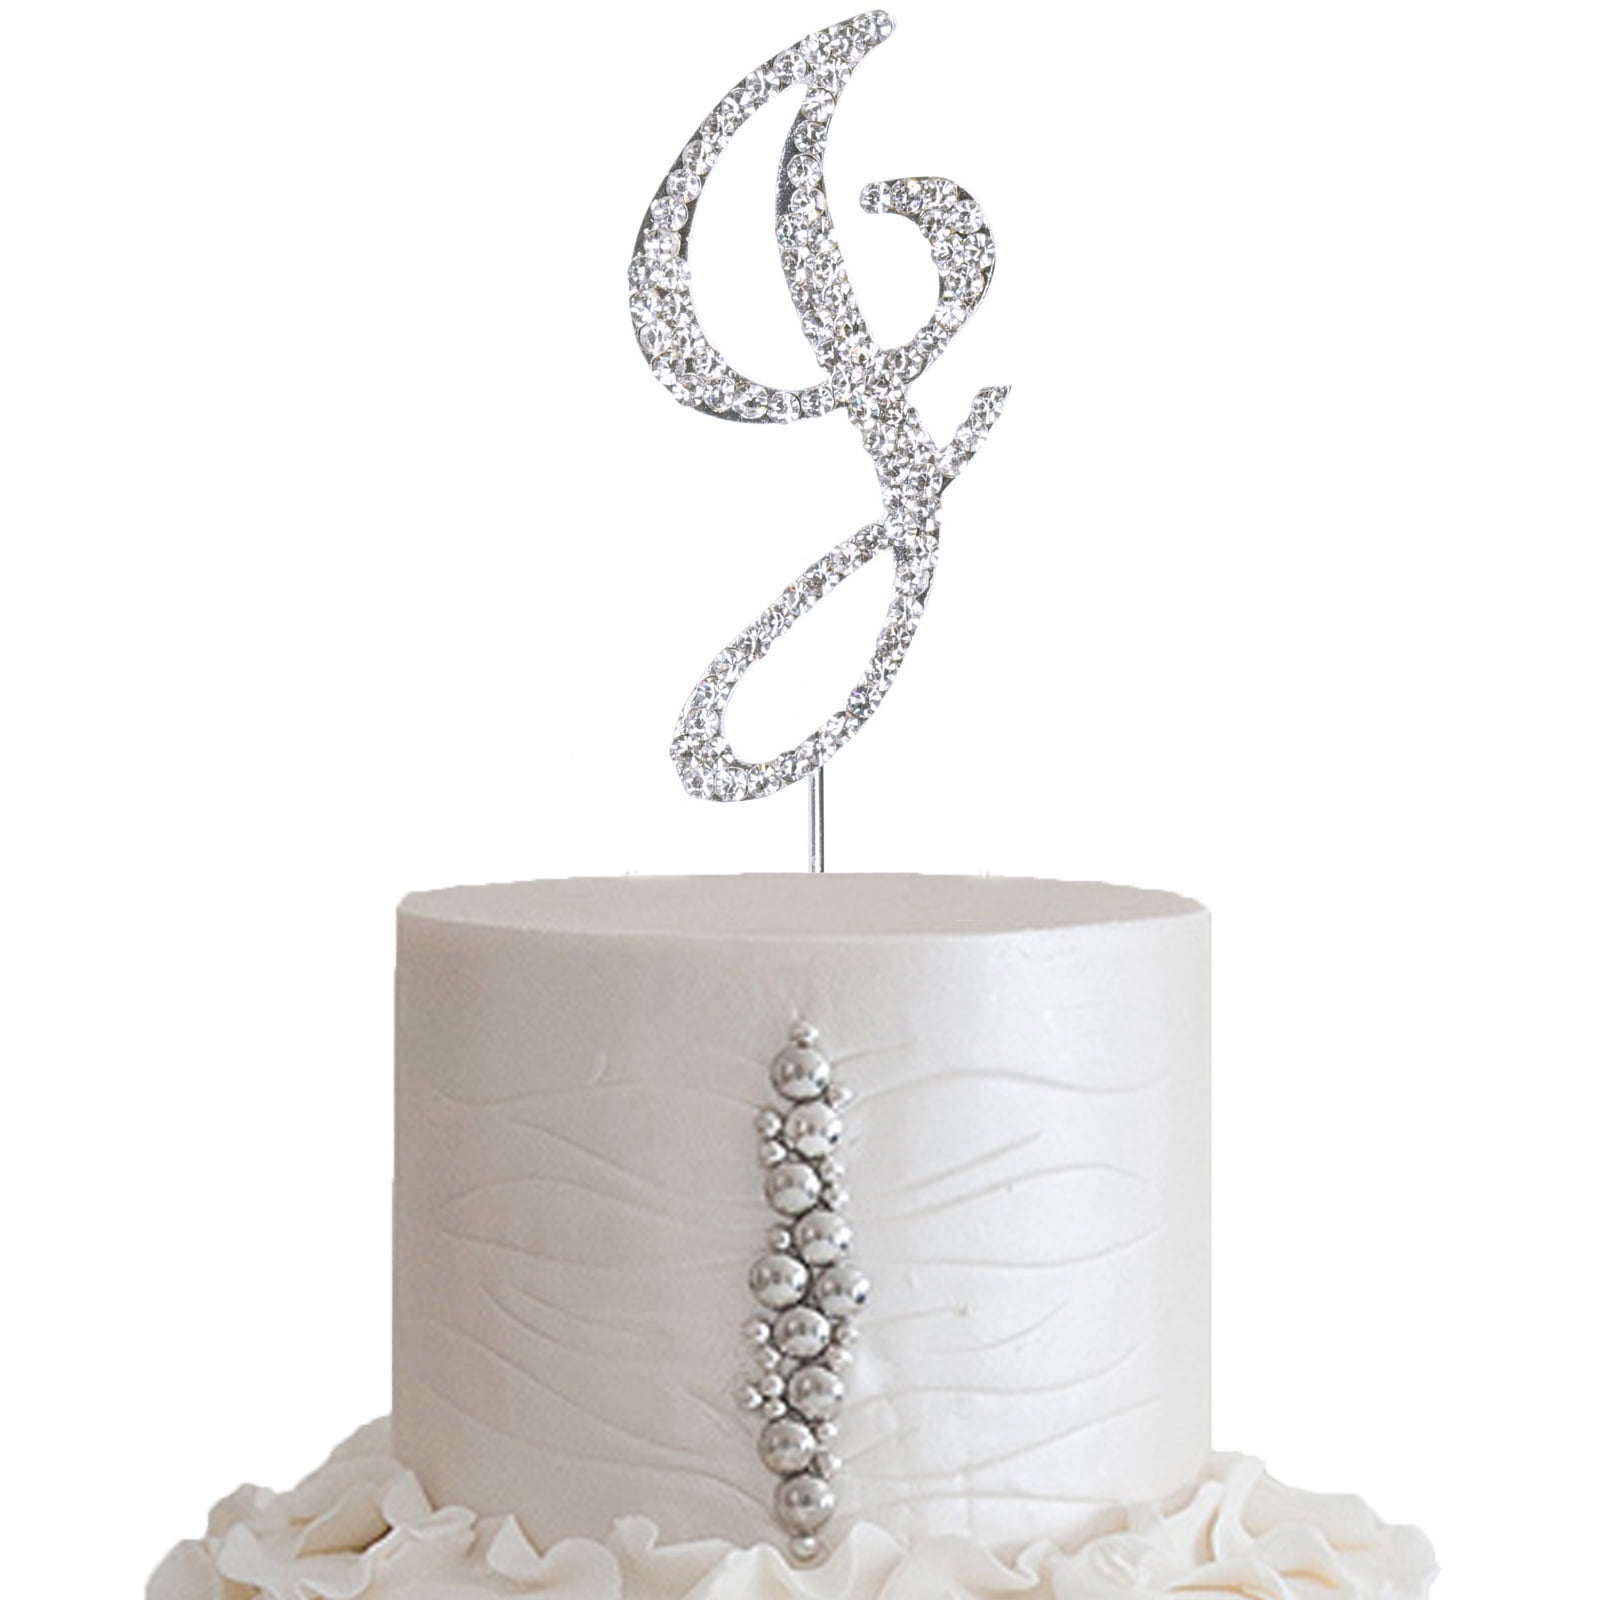 Large Rhineston Crystal Monogram Letter "Z" Wedding Cake Topper 5"inch High 